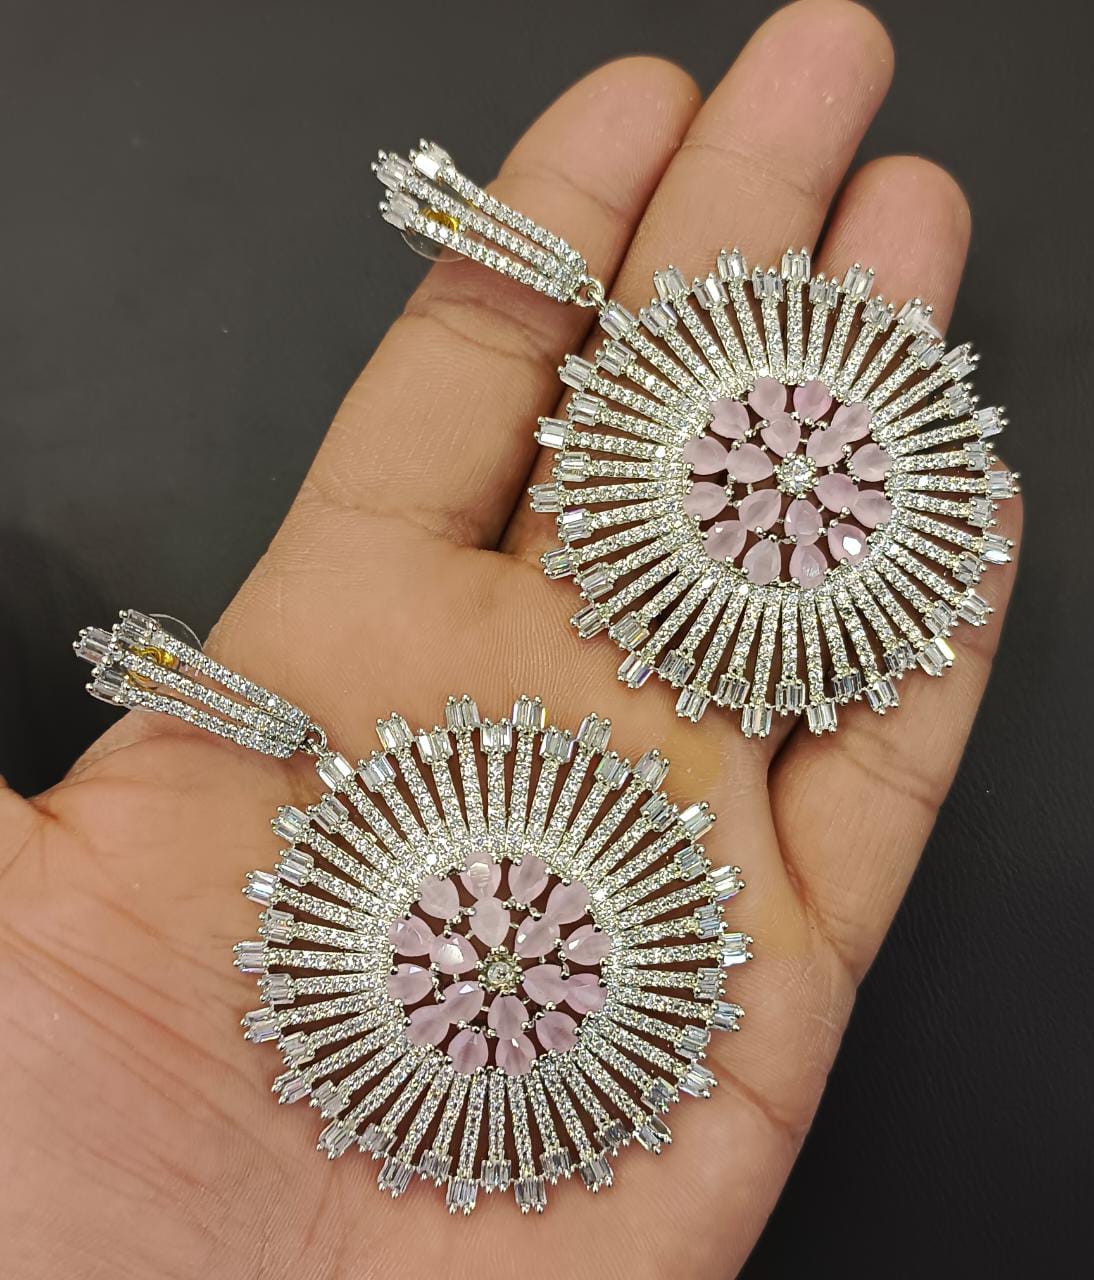 Get Beautiful Round Silver Crystal Earrings